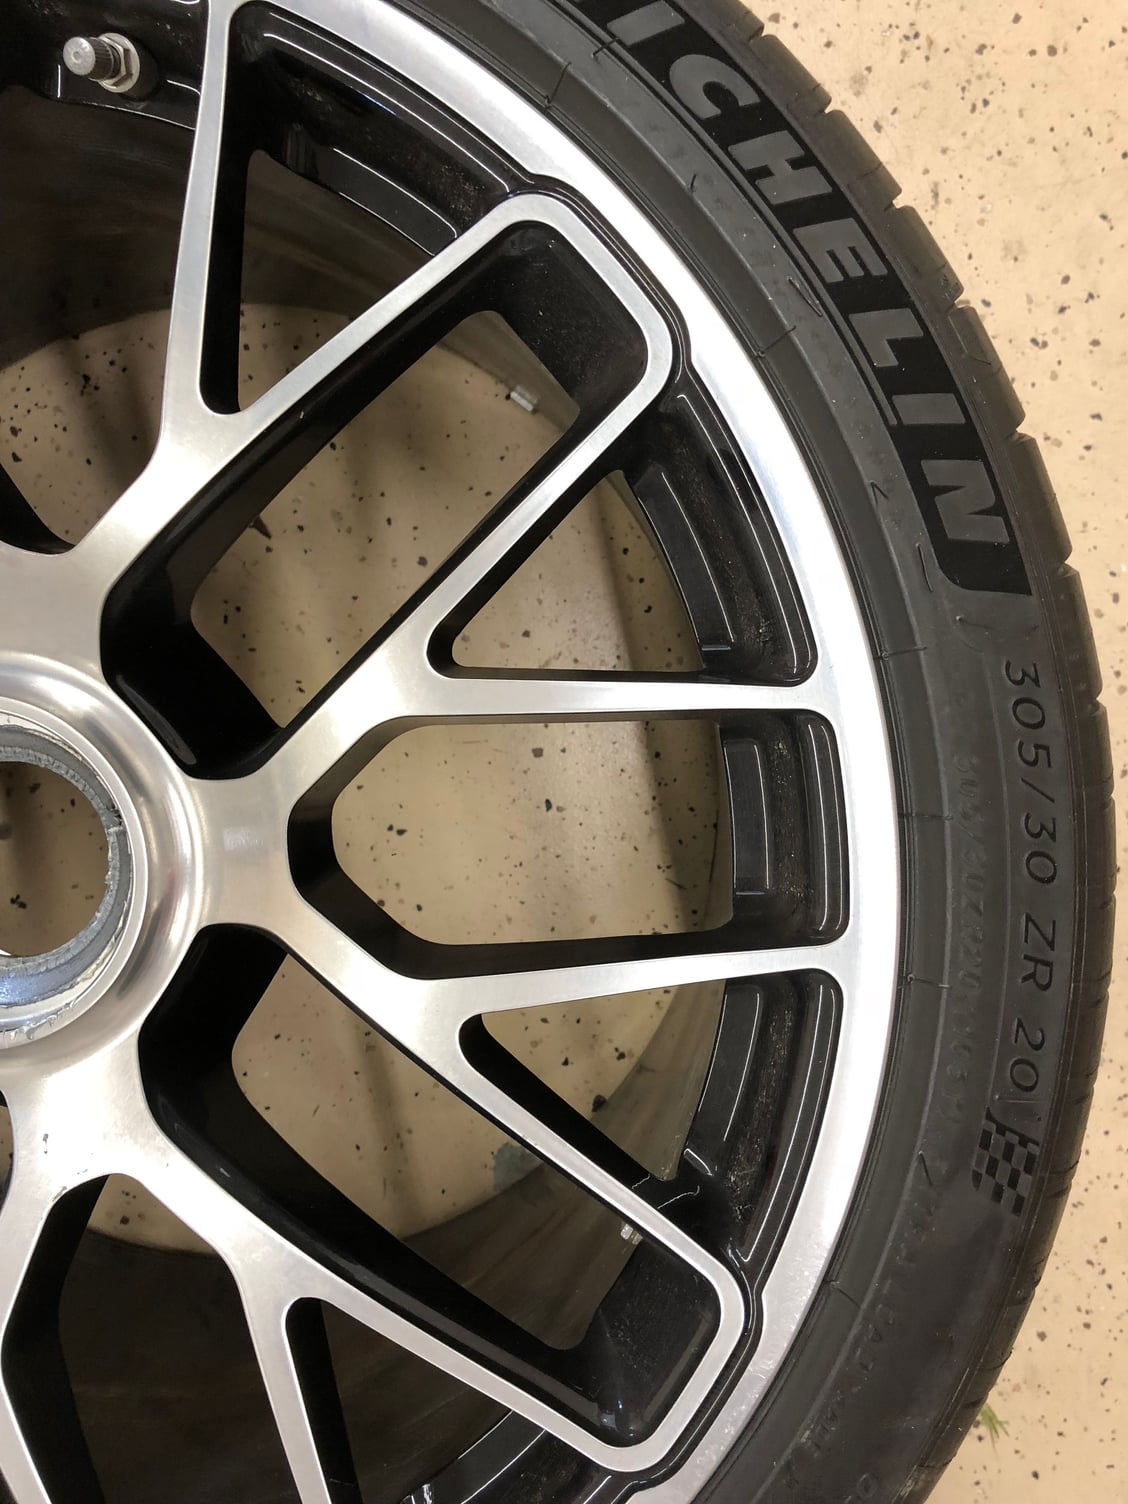 Wheels and Tires/Axles - ***  Porsche 991.1 and .2 Centerlock Center Lock Wheels Turbo S, GTS  *** - Used - 2014 to 2019 Porsche 911 - Monroe, MI 48161, United States